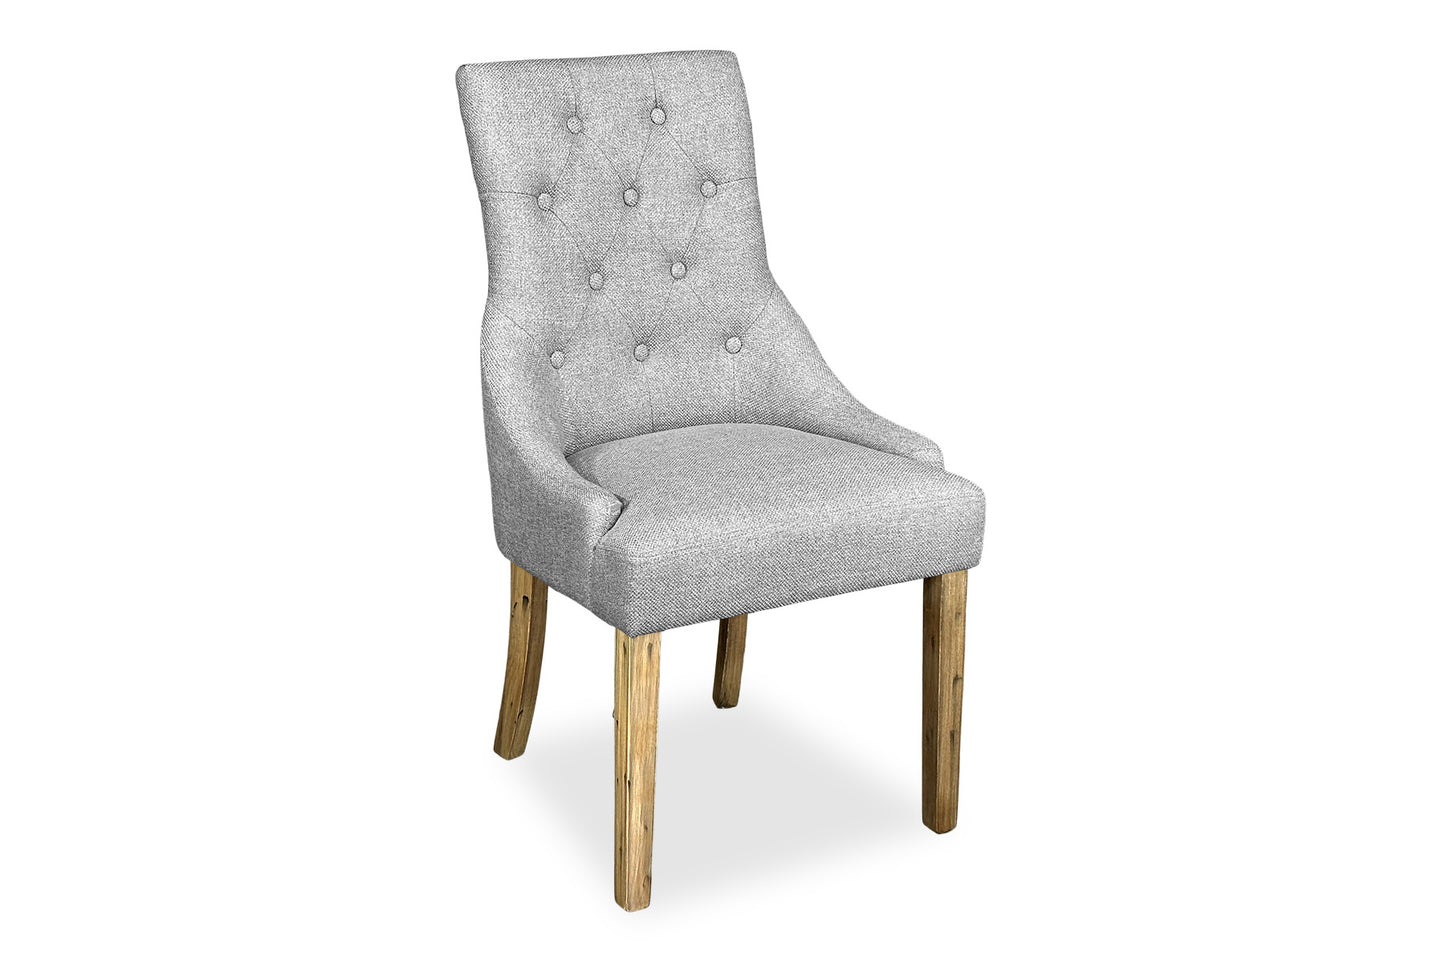 Antique Scoop Back Chair - Light Grey